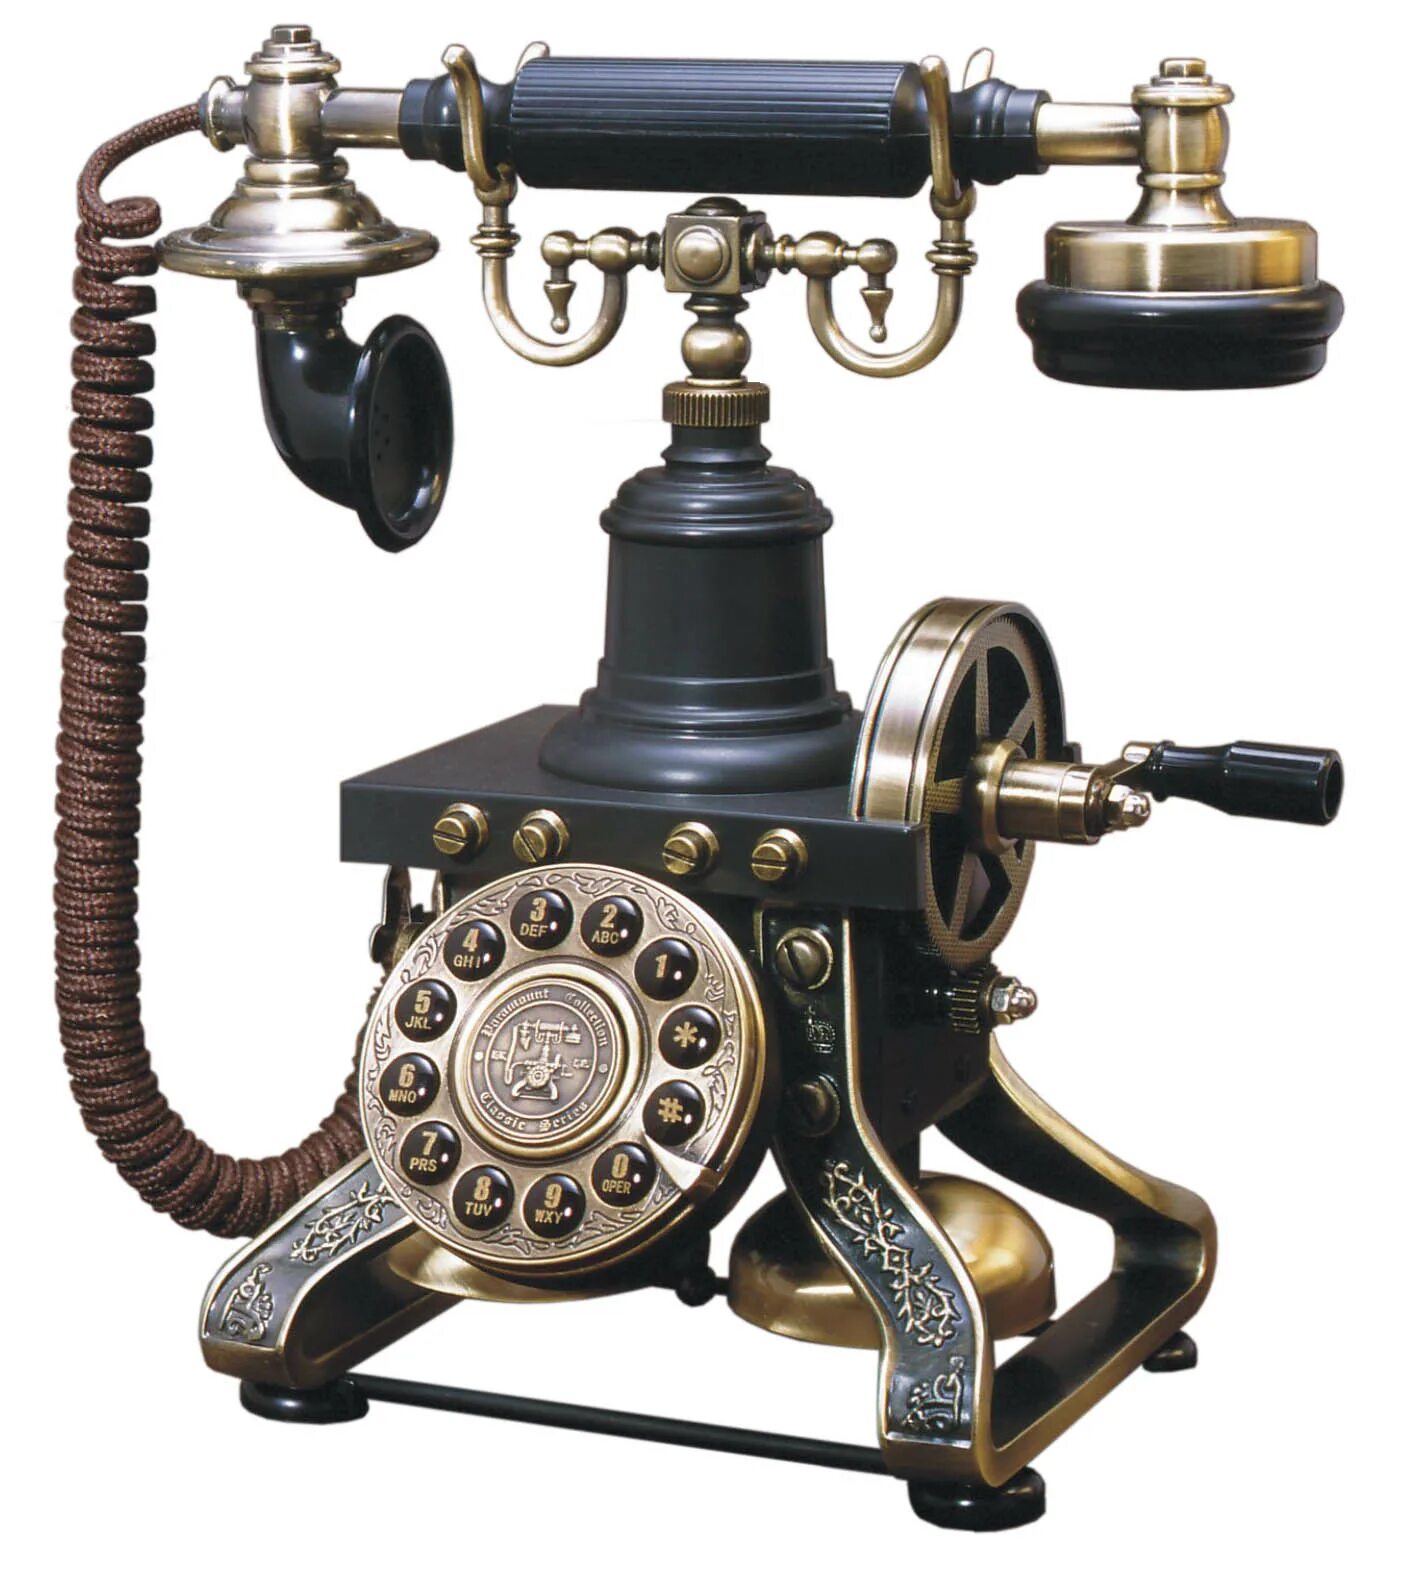 Картинки телефонных аппаратов. Телефонный аппарат Бойля 1896. Старинный телефонный аппарат. Телефонный аппарат ретро. Ретро телефон.